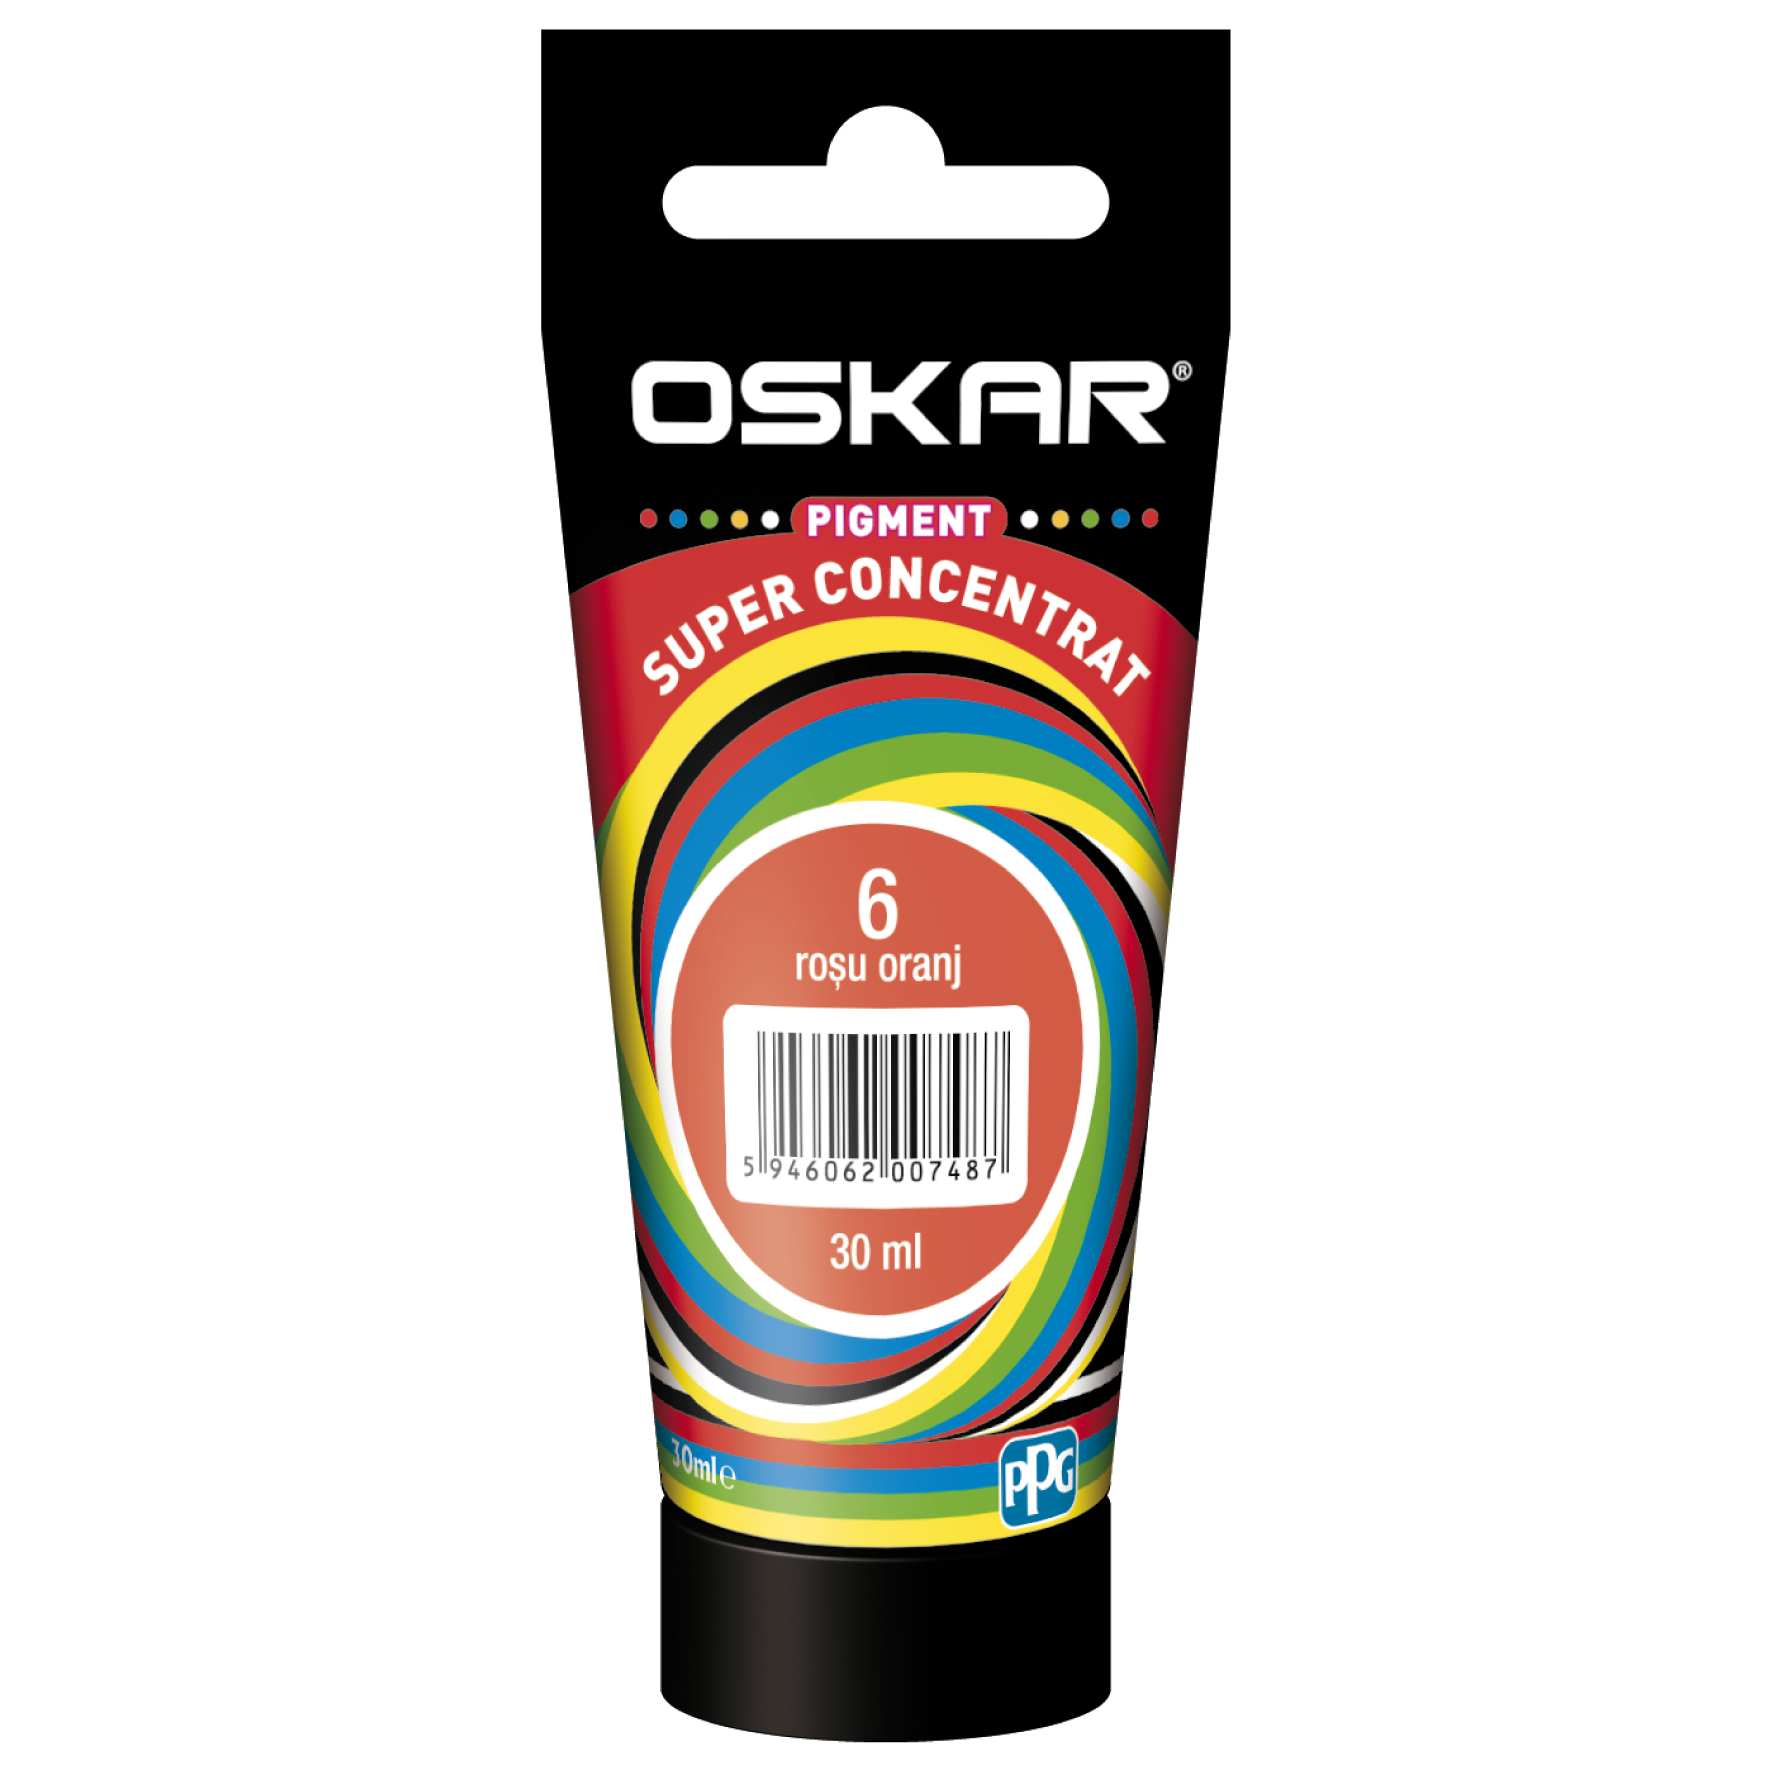 Pigment vopsea lavabila Oskar super concentrat, rosu orange 6, 30 ml Coloranti